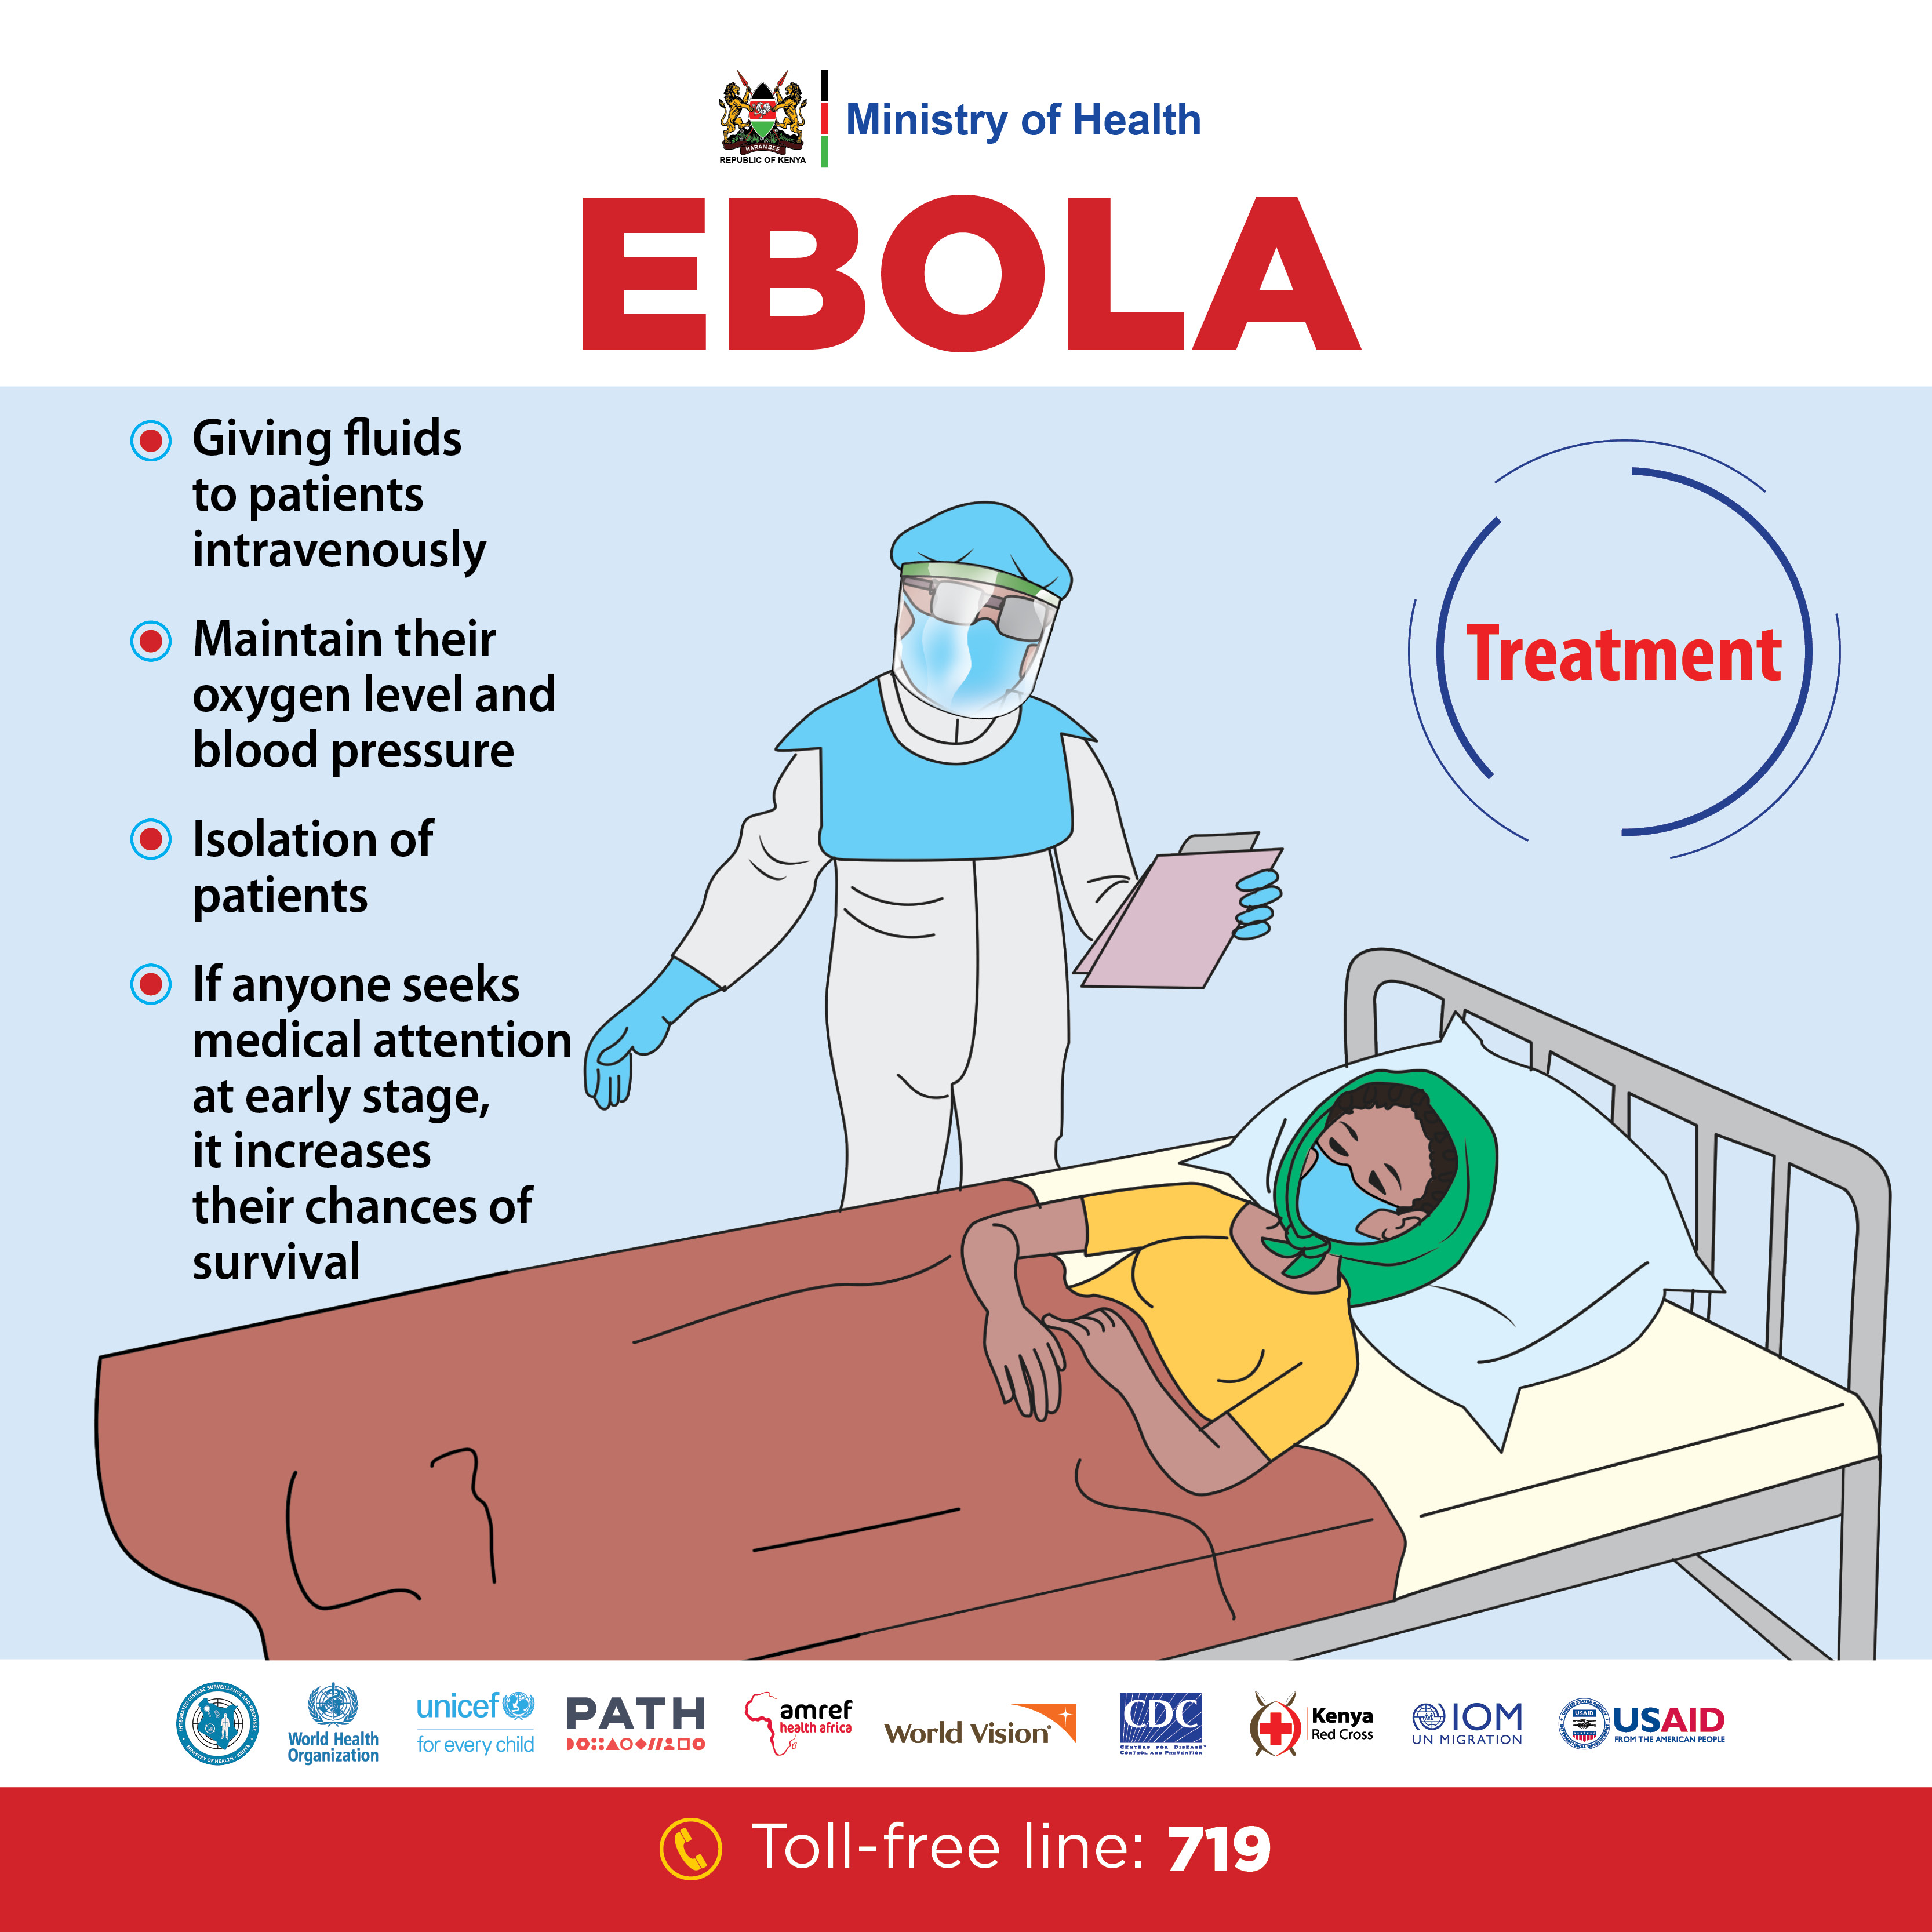 Treatment for Ebola